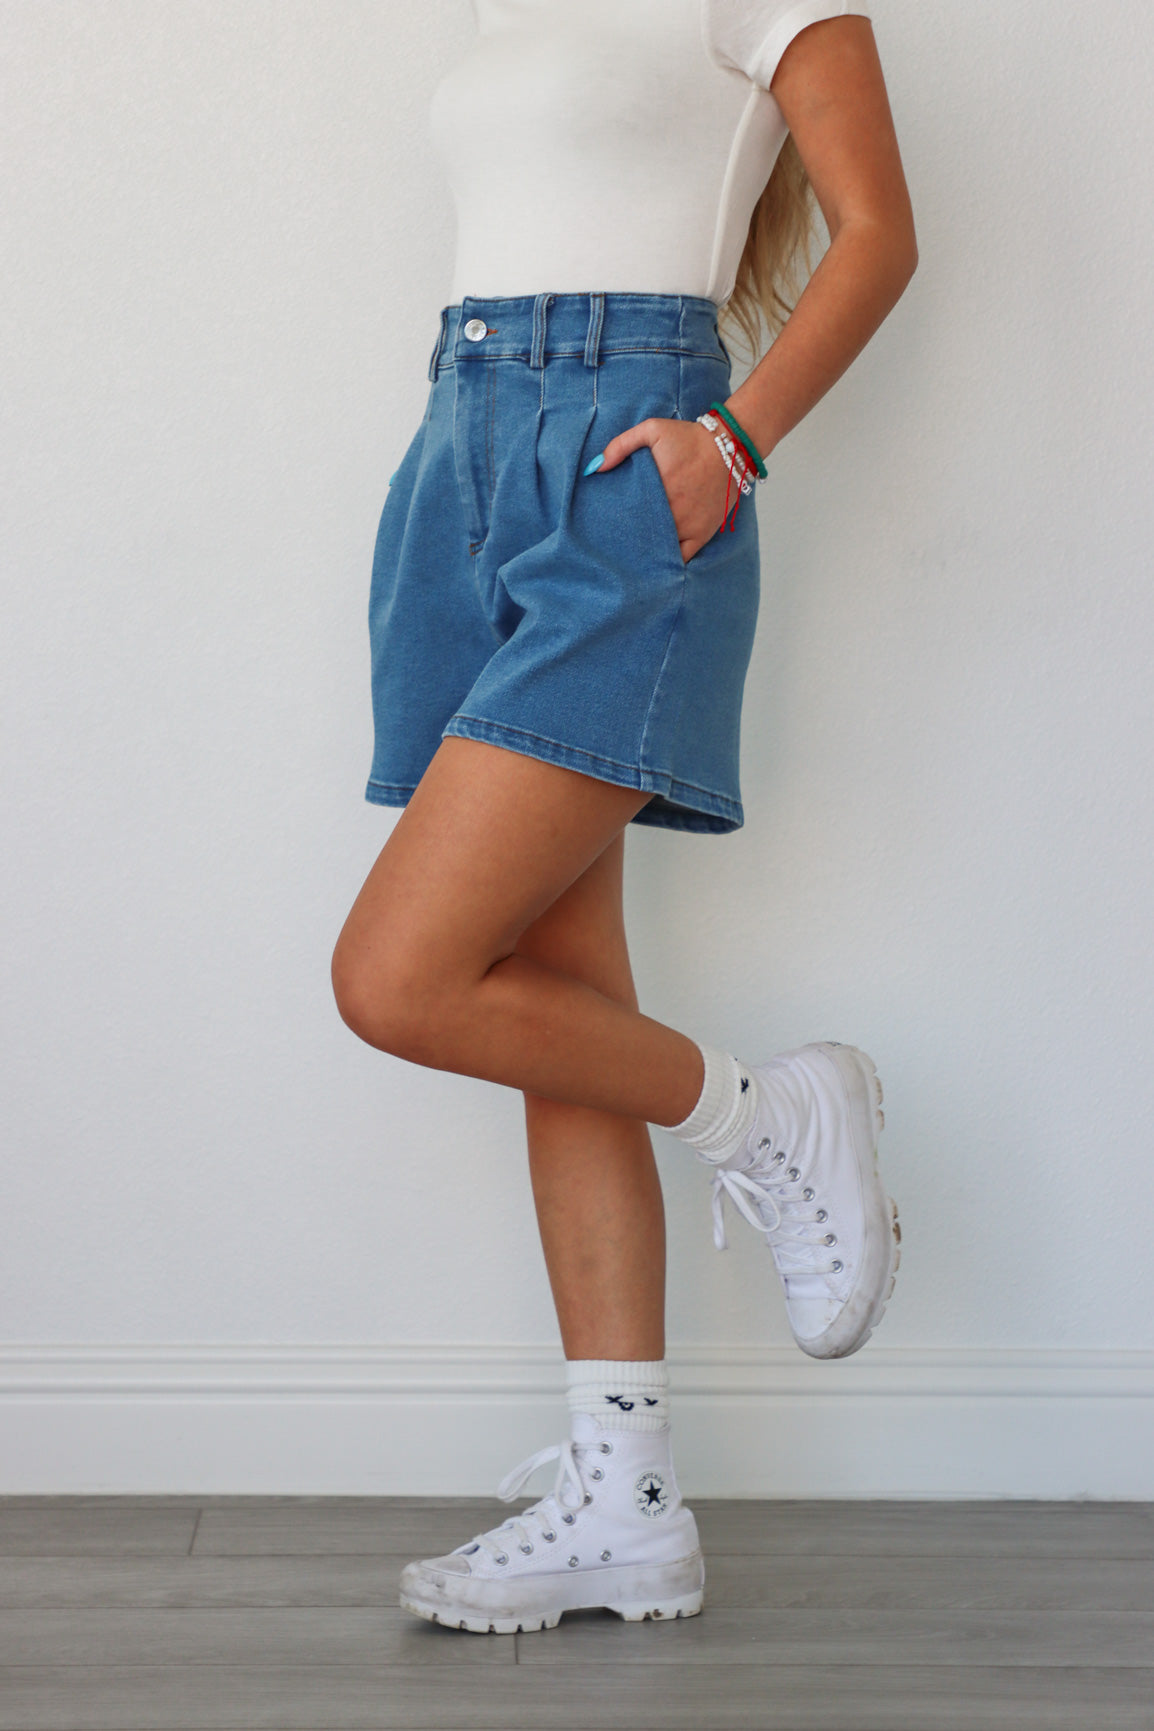 girl wearing blue denim jean shorts